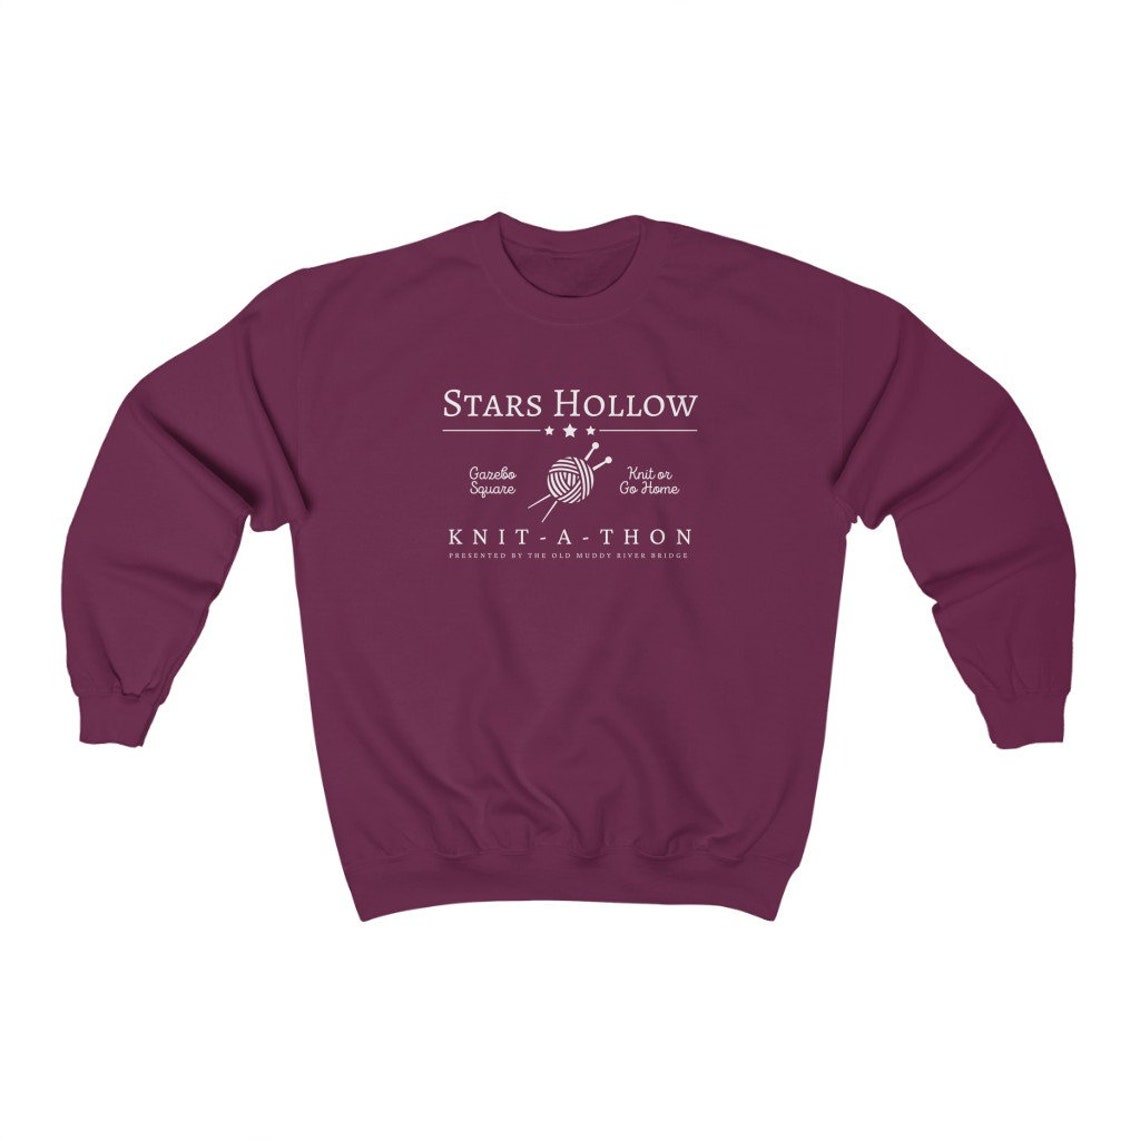 Stars Hollow Sweatshirt / Knit A Thon Sweatshirt / Rory and | Etsy